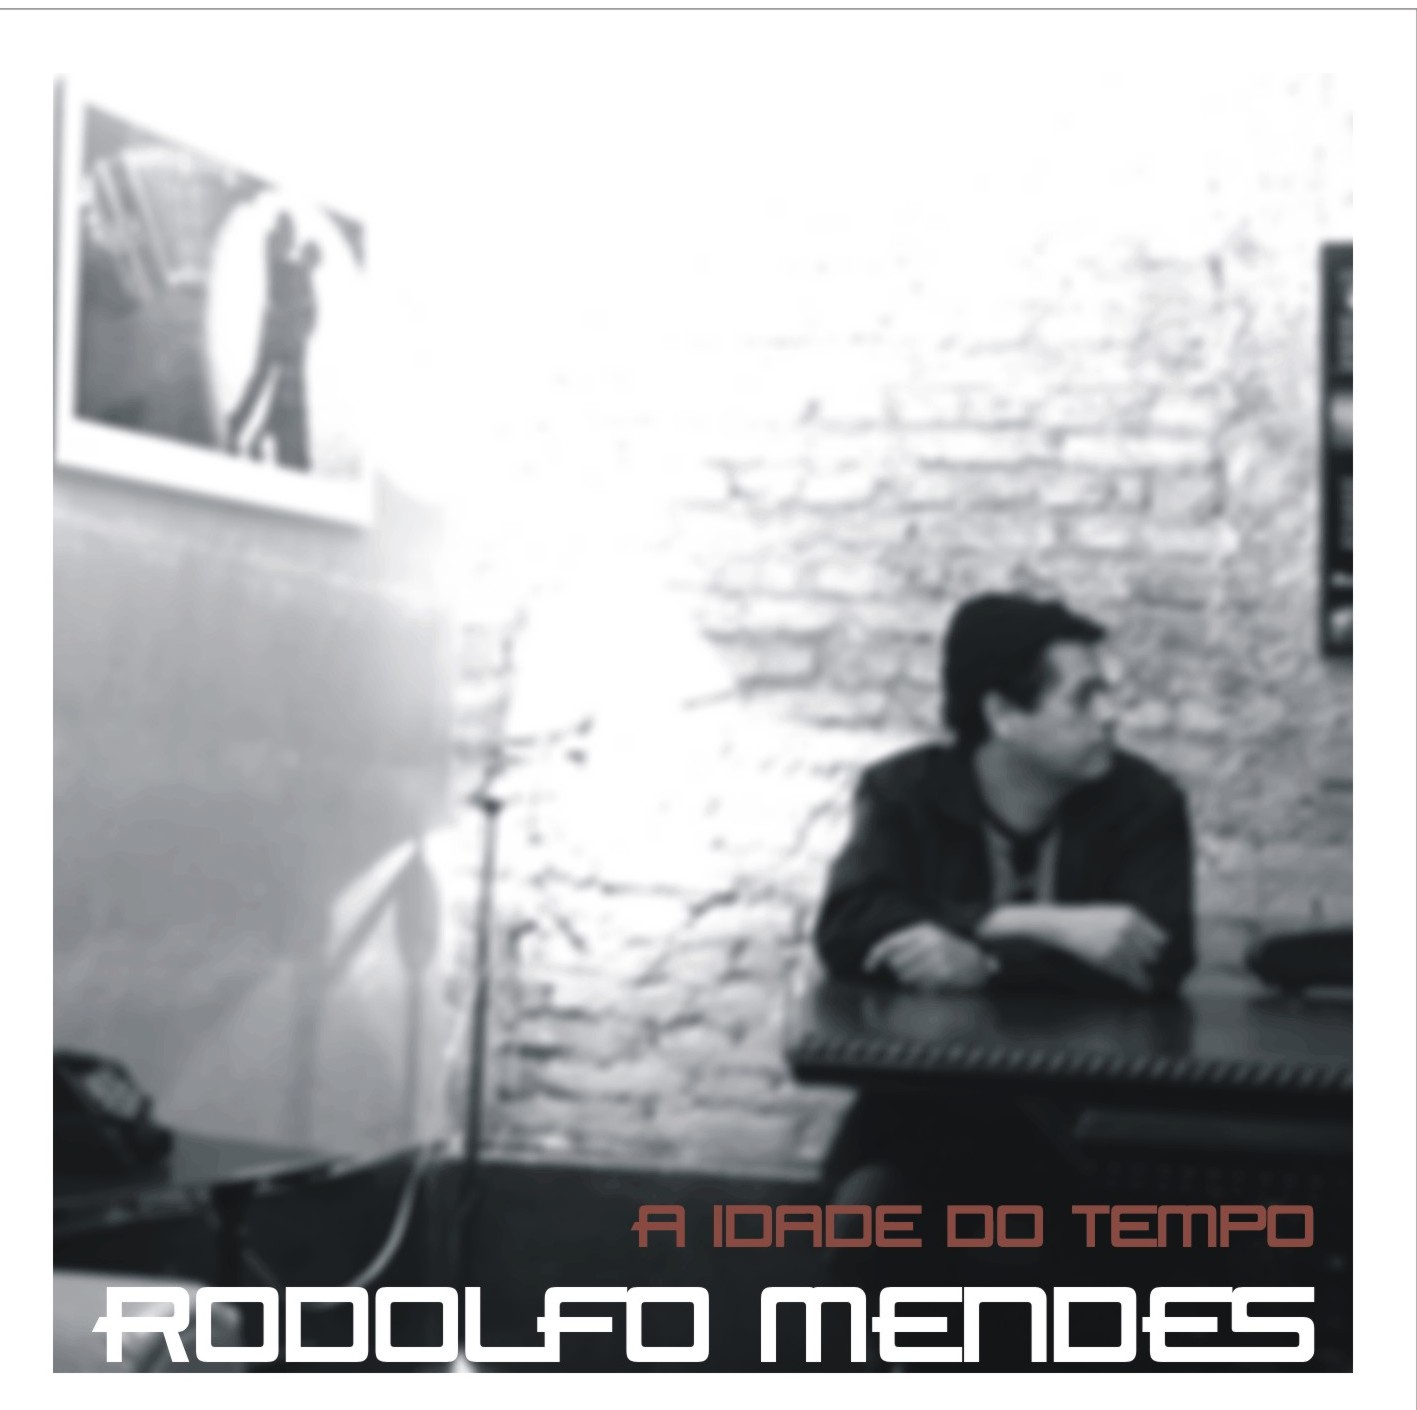 [Capa+CD+Rodolfo.jpg]